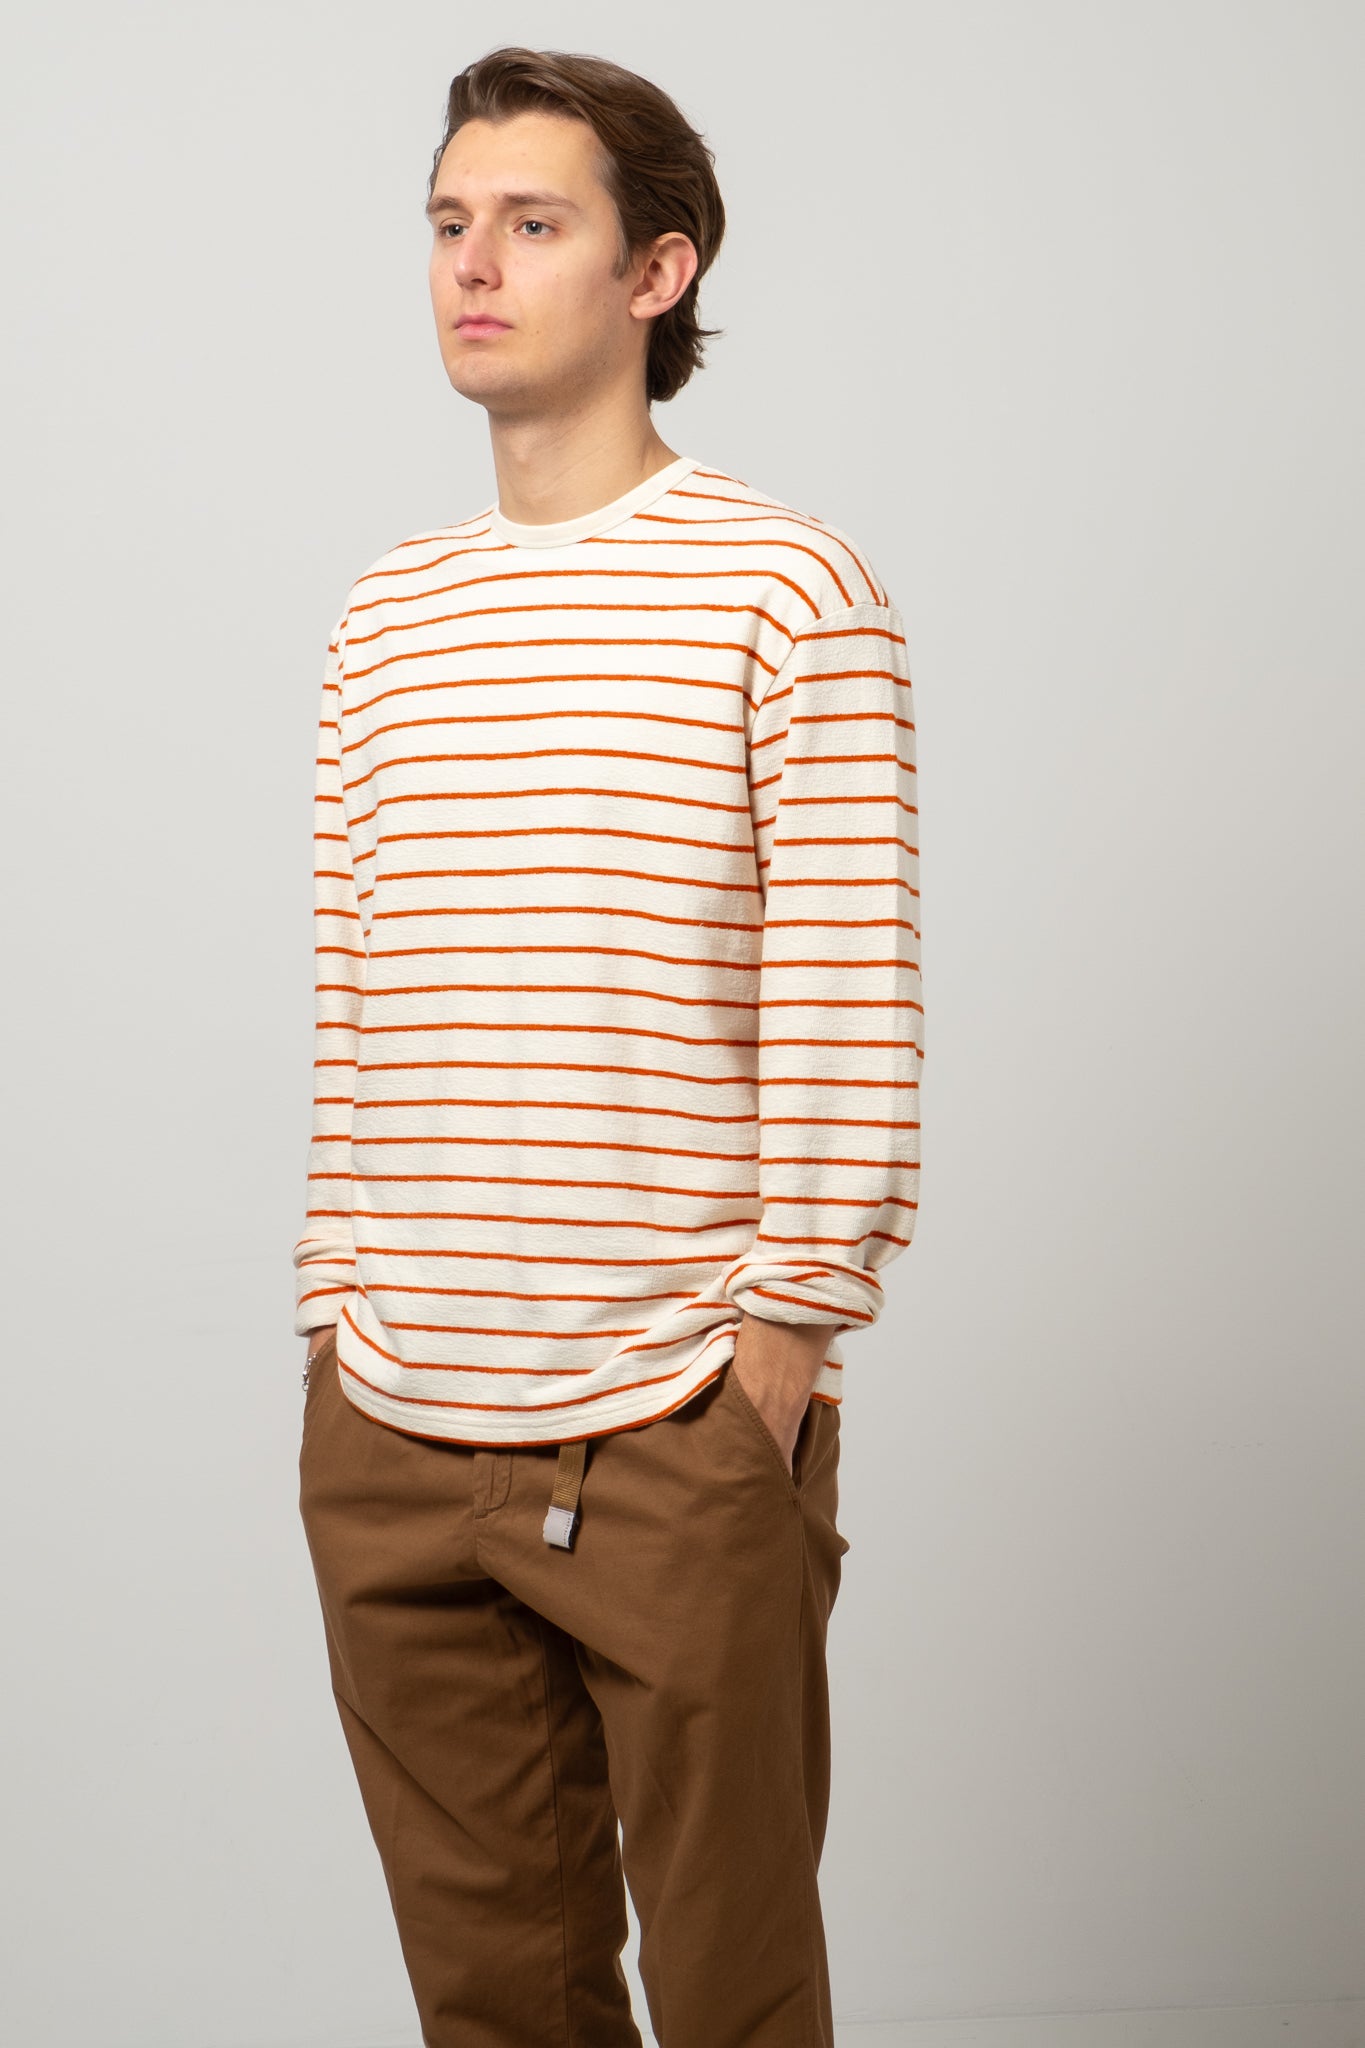 Waternish Long Sleeve - Tangerine stripe